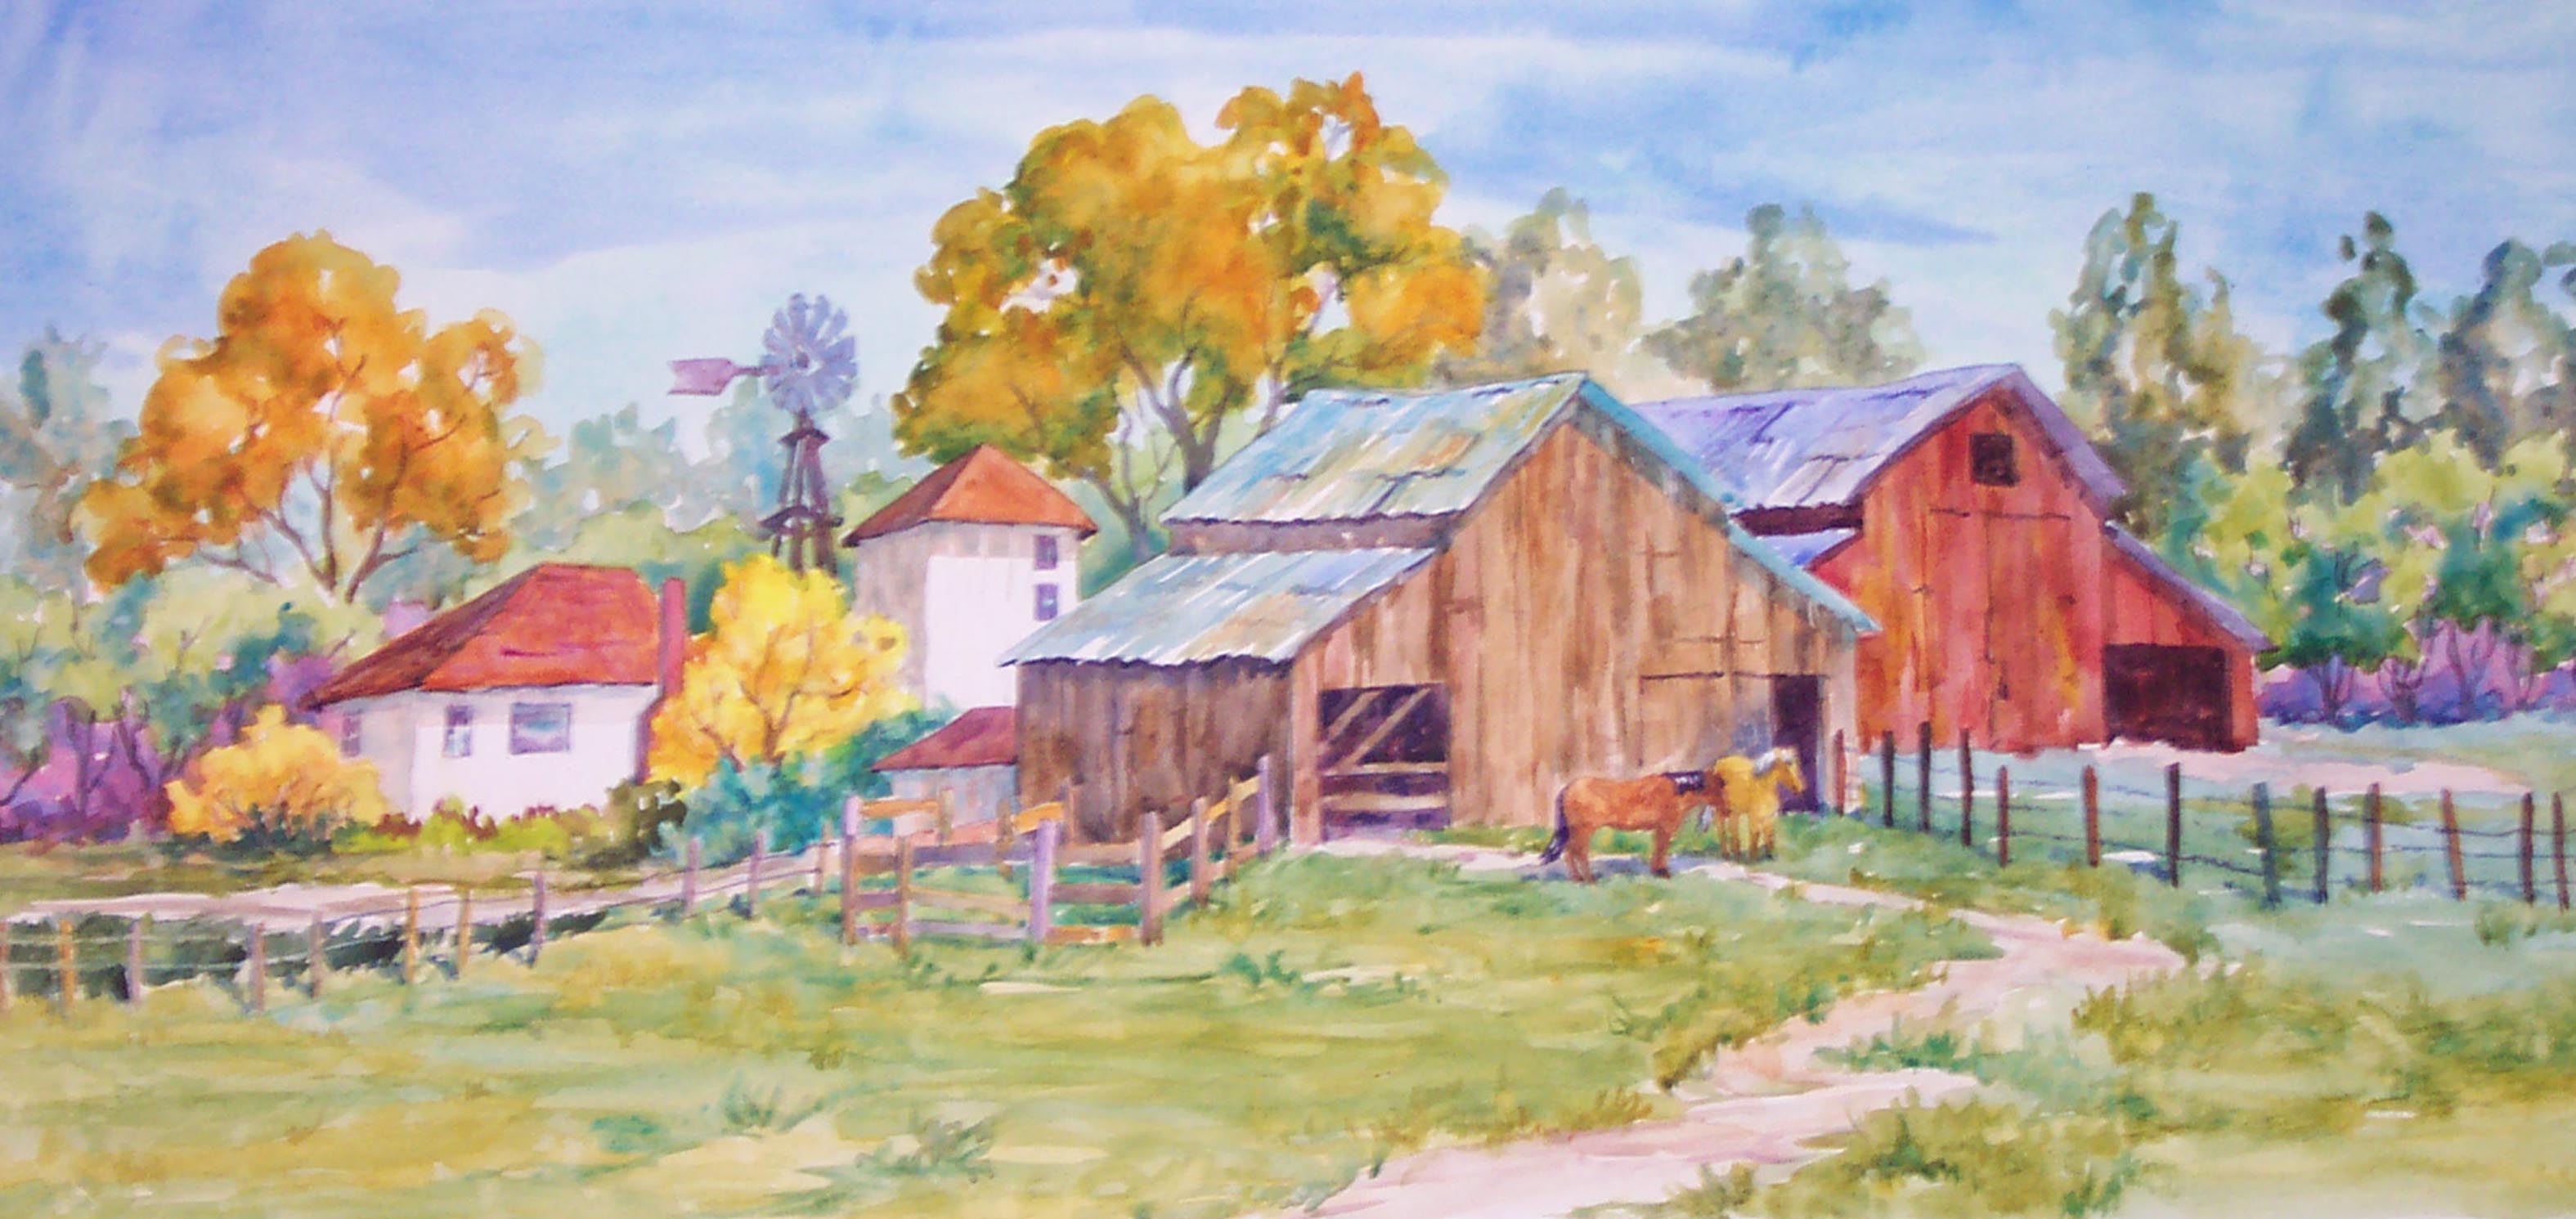 Watercolor Barn Painting At PaintingValley Com Explore Collection Of Watercolor Barn Painting